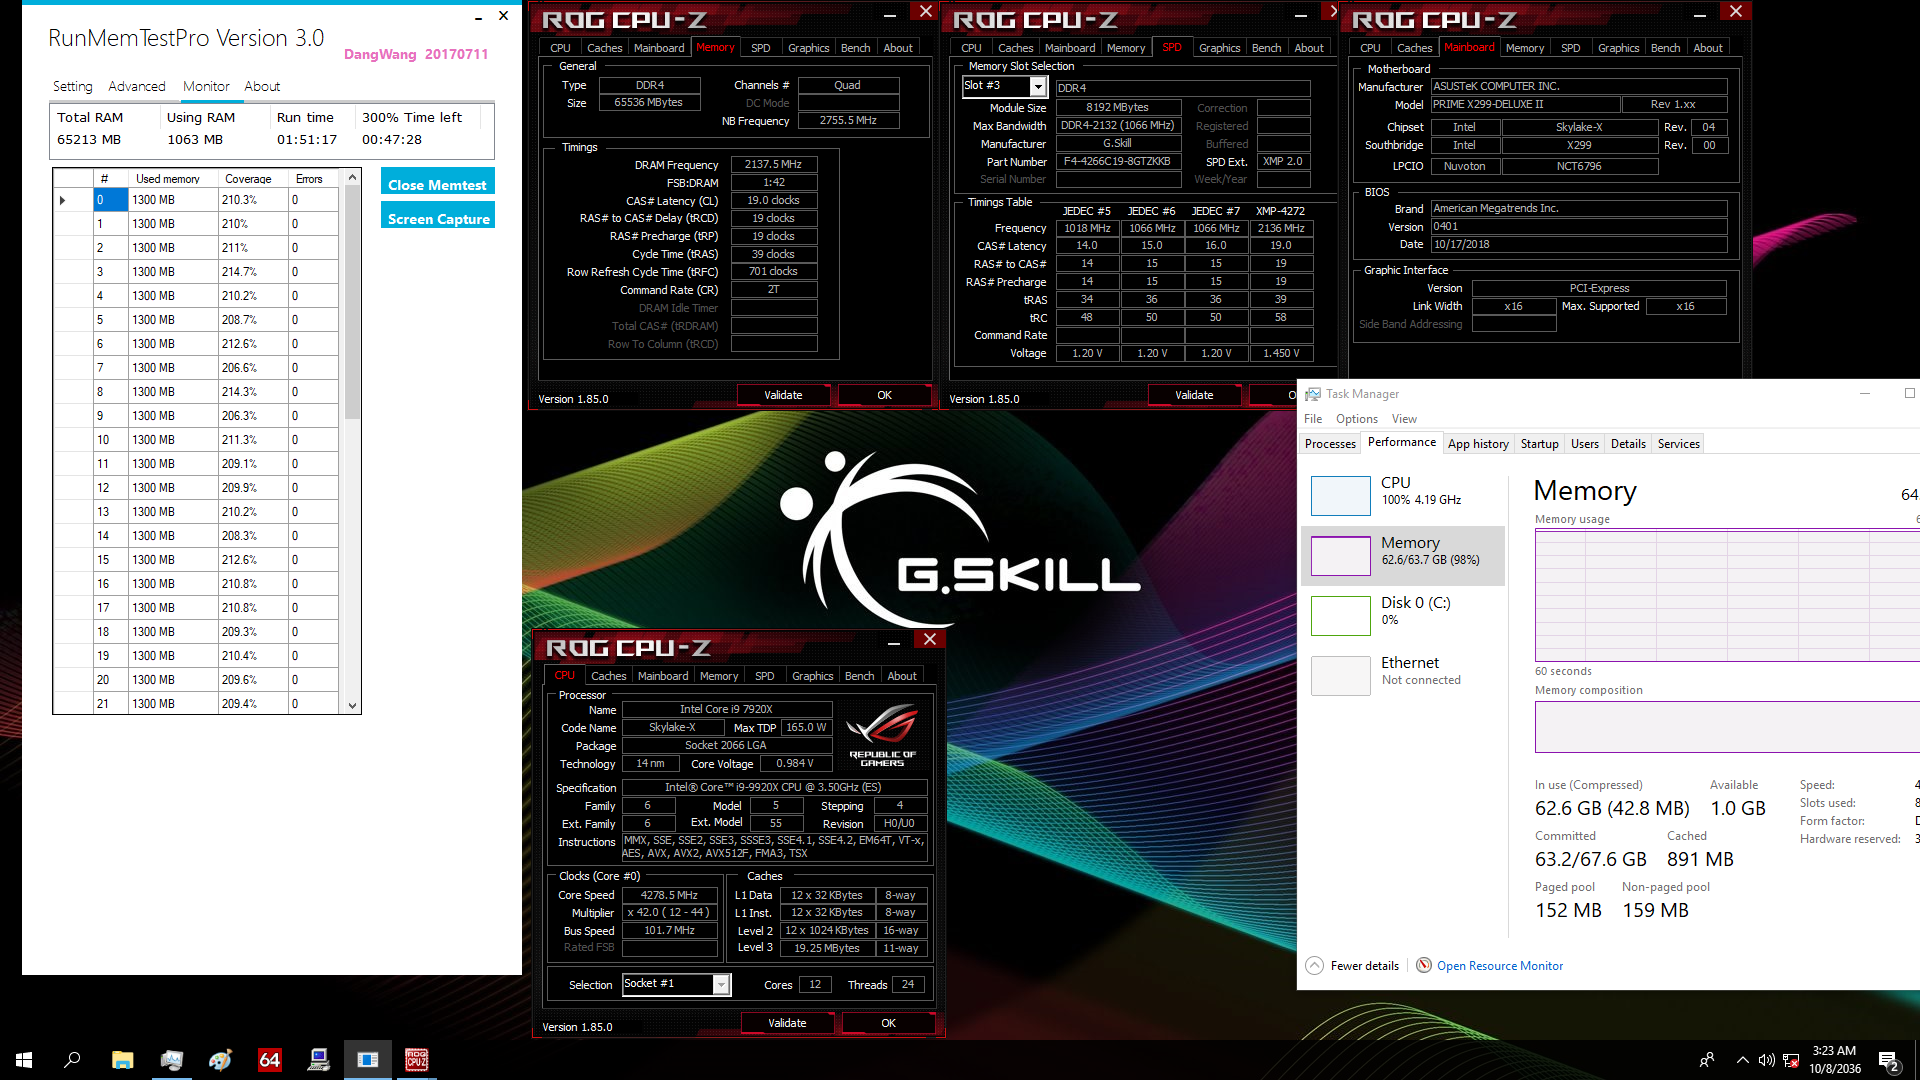 03 tz 64gb 4266 G.SKILL เปิดตัวแรม Trident Z RGB DDR4 4266 64GB (8x8GB) และ Trident Z RGB DDR4 4000 128GB (8x16GB) รุ่นใหม่ล่าสุดที่ใช้งานกับแพลตฟอร์มซีพียู Intel Core X series 